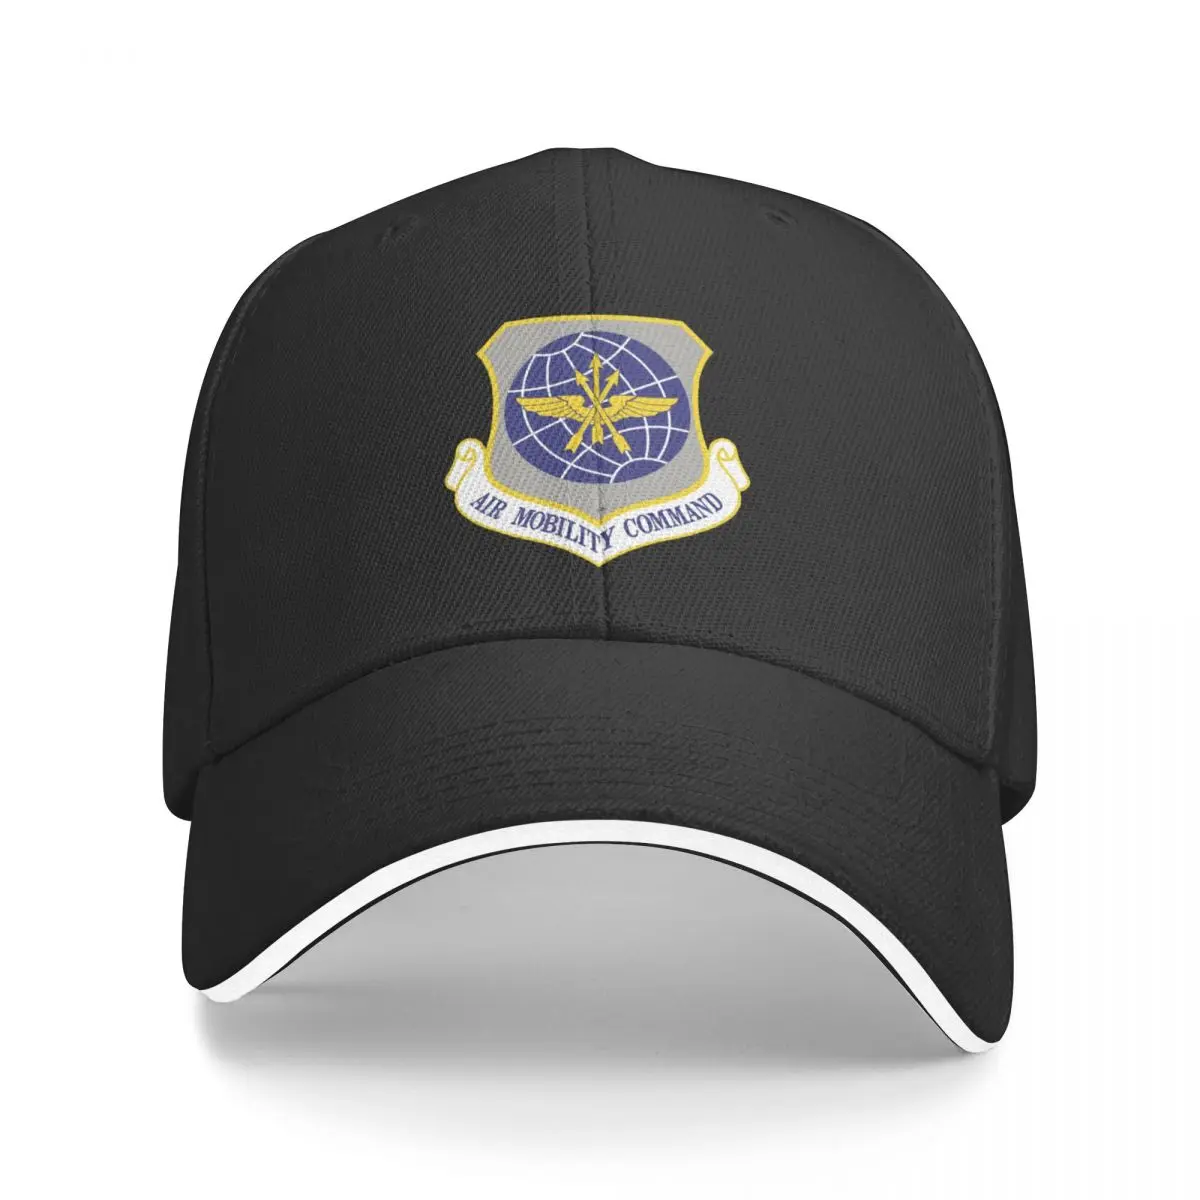 

New Air Mobility Command (AMC) бейсболка с заплатой Visor hard hat, мужские кепки, женские кепки